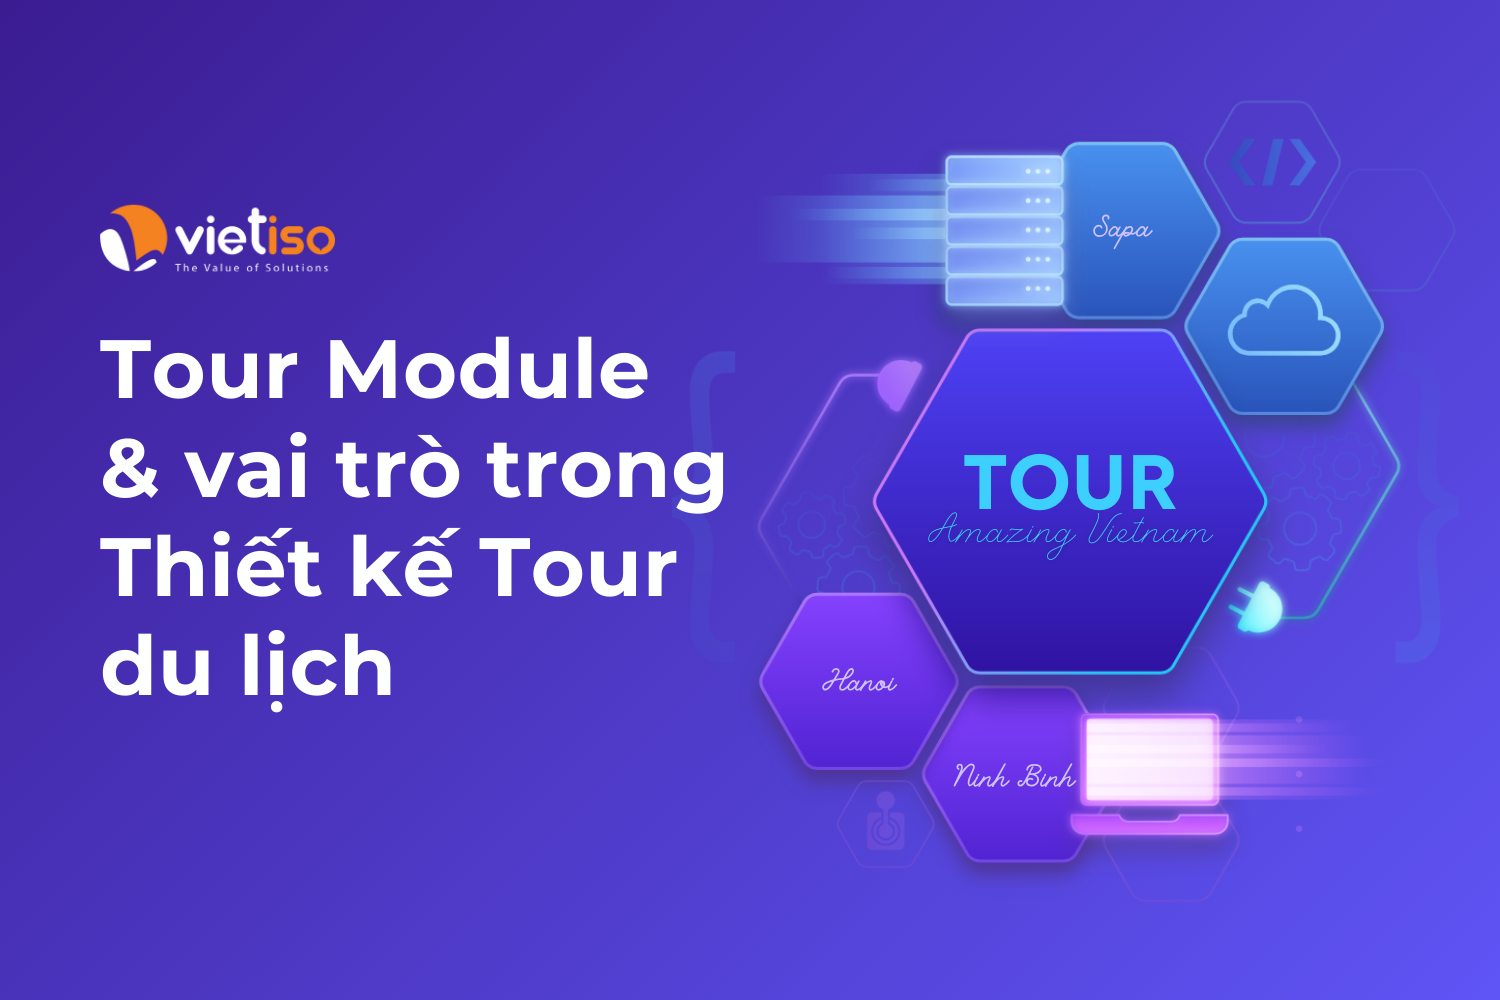 Tour Module là gì? Vai trò của Tour Module